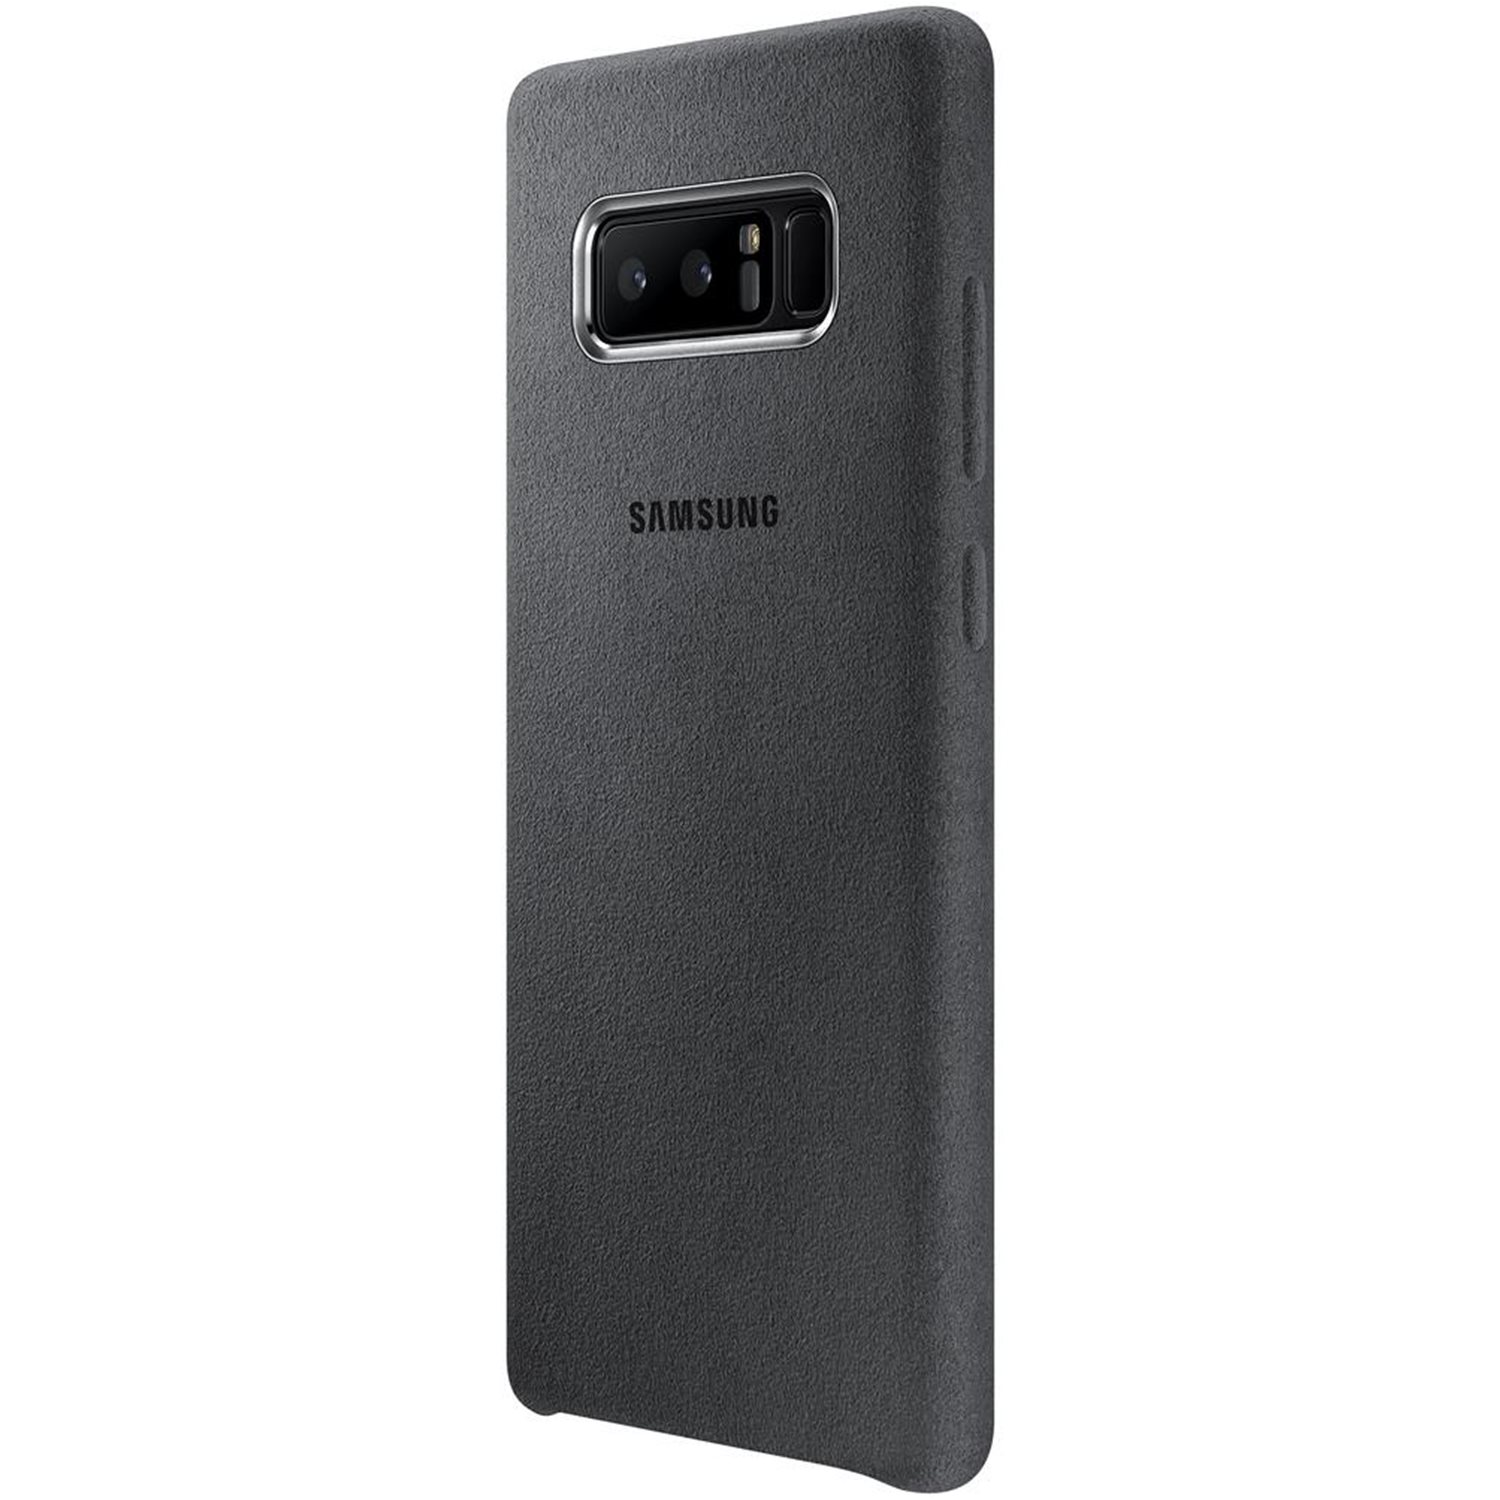 Official Samsung Galaxy Note 8 Alcantara Cover Case - Dark Grey